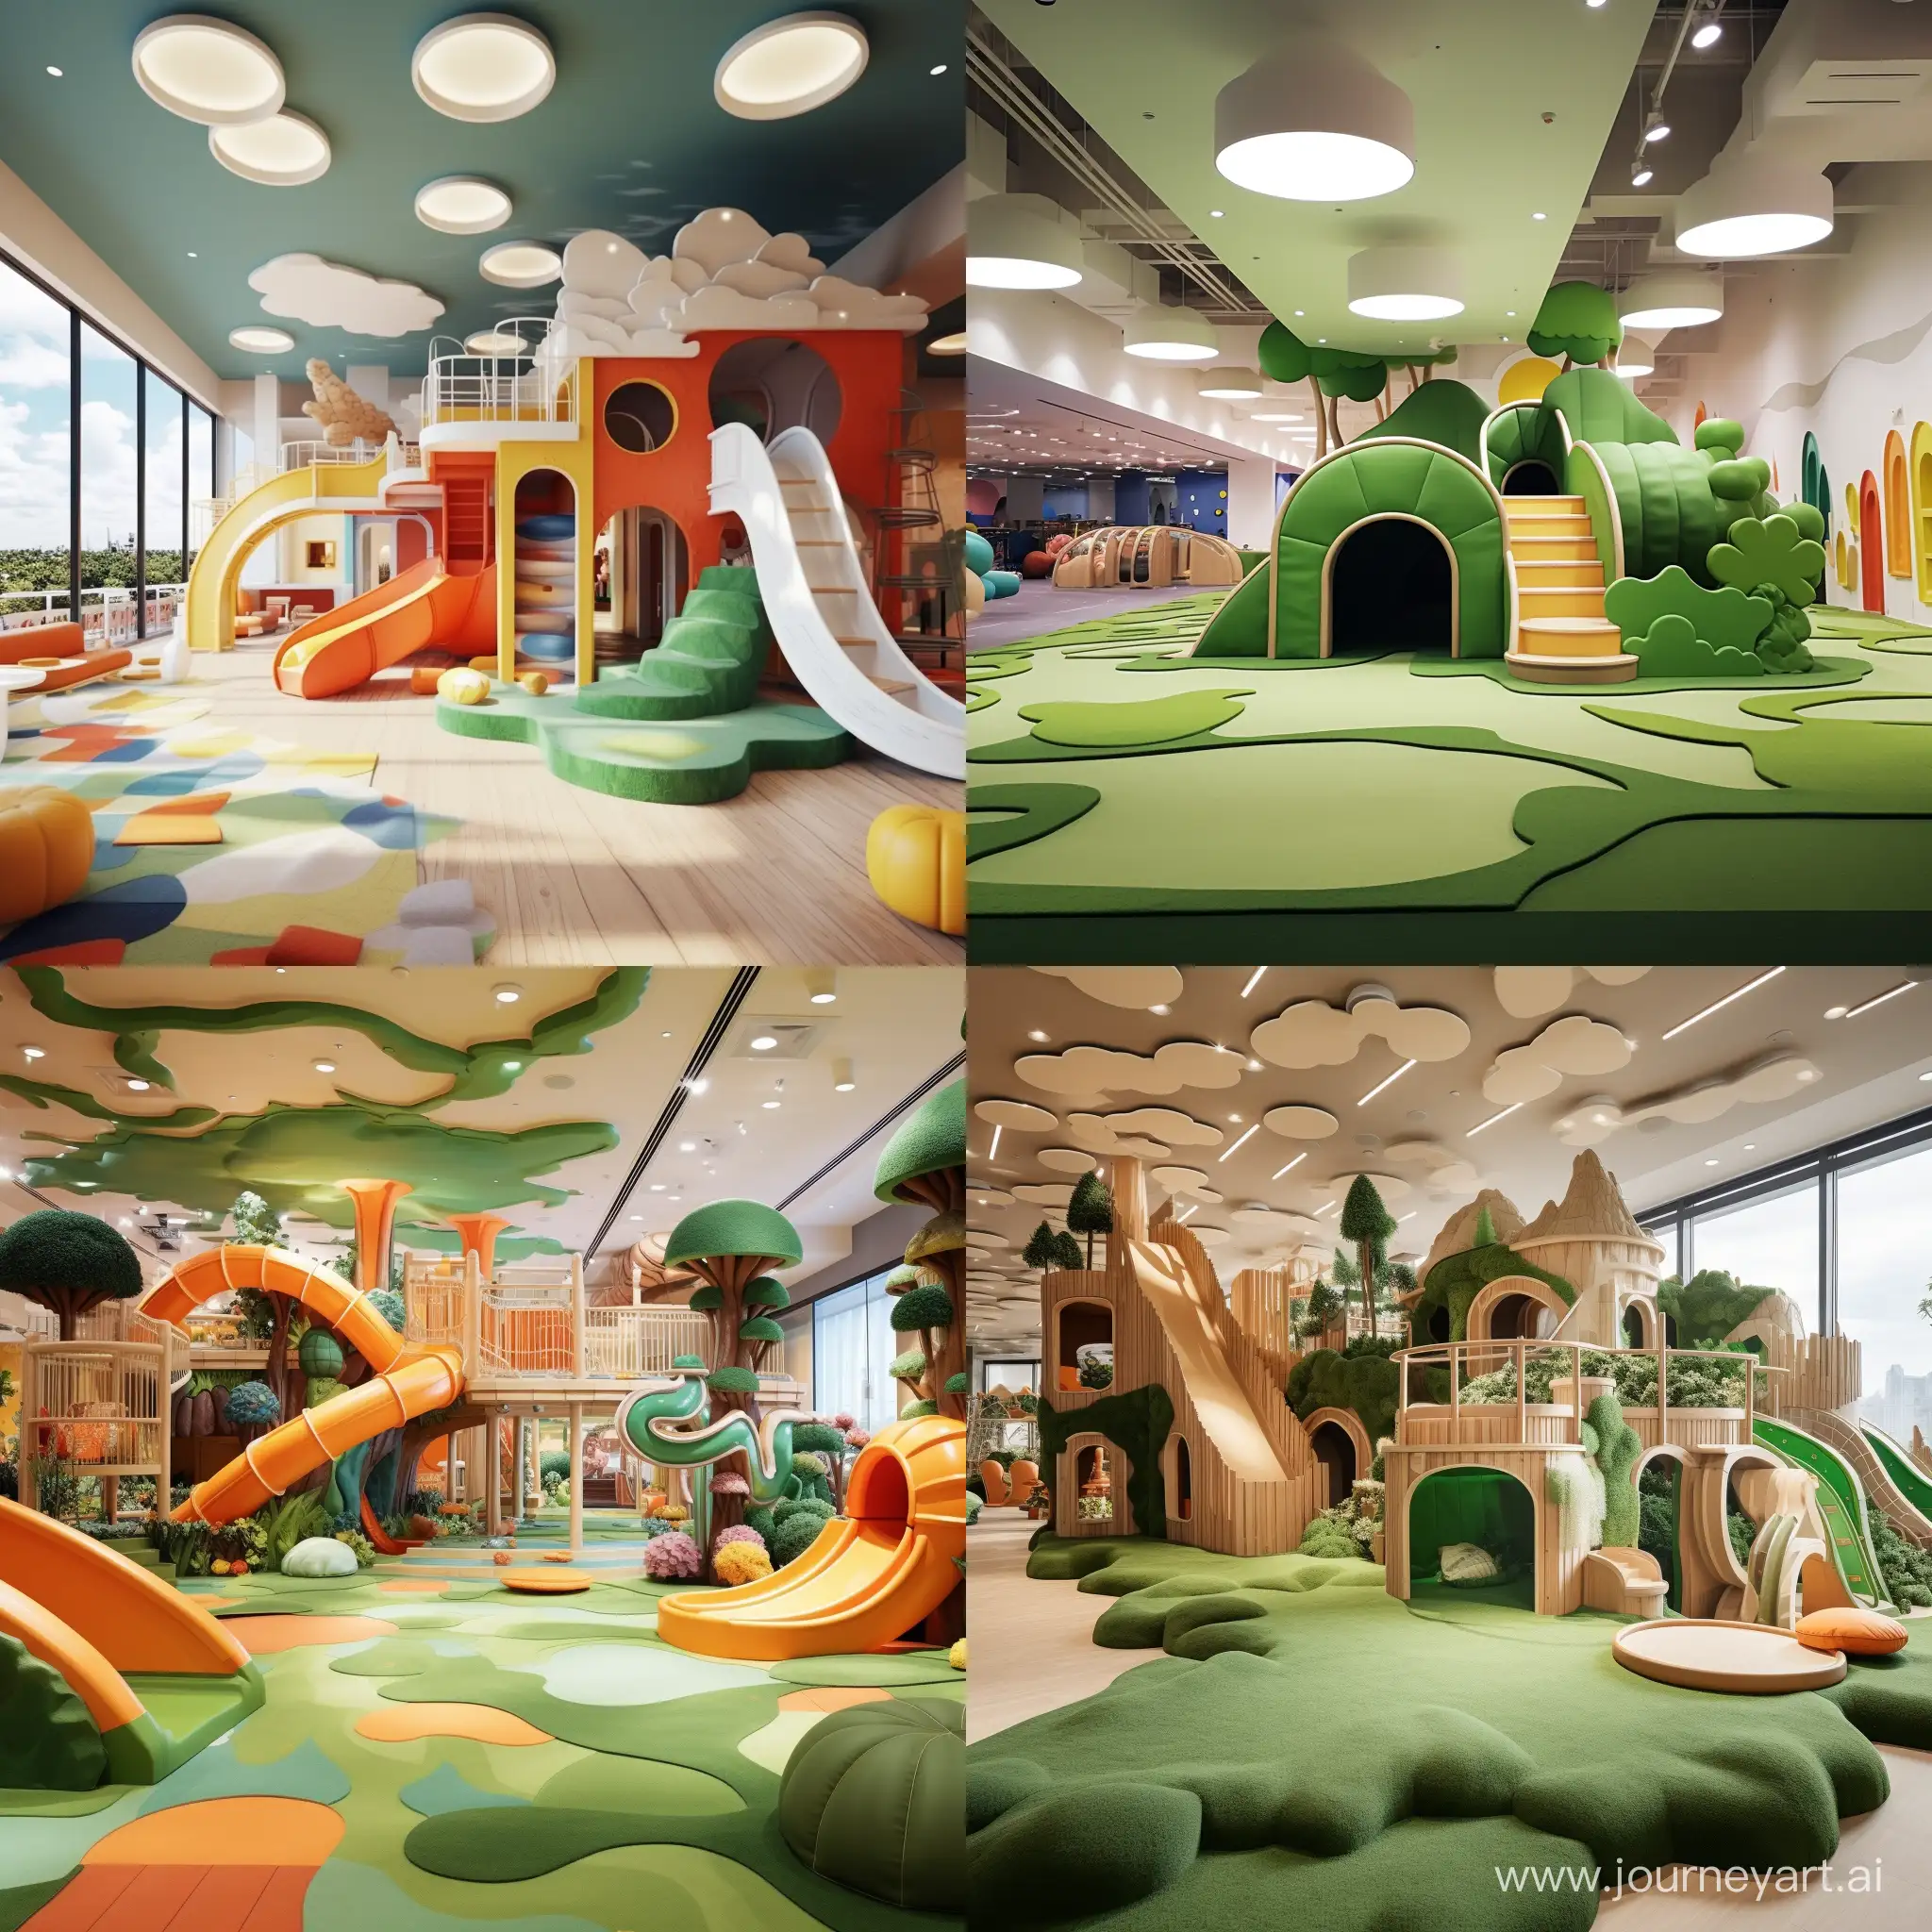 Vibrant-Playroom-Oasis-for-Kids-Shopping-Center-Adventure